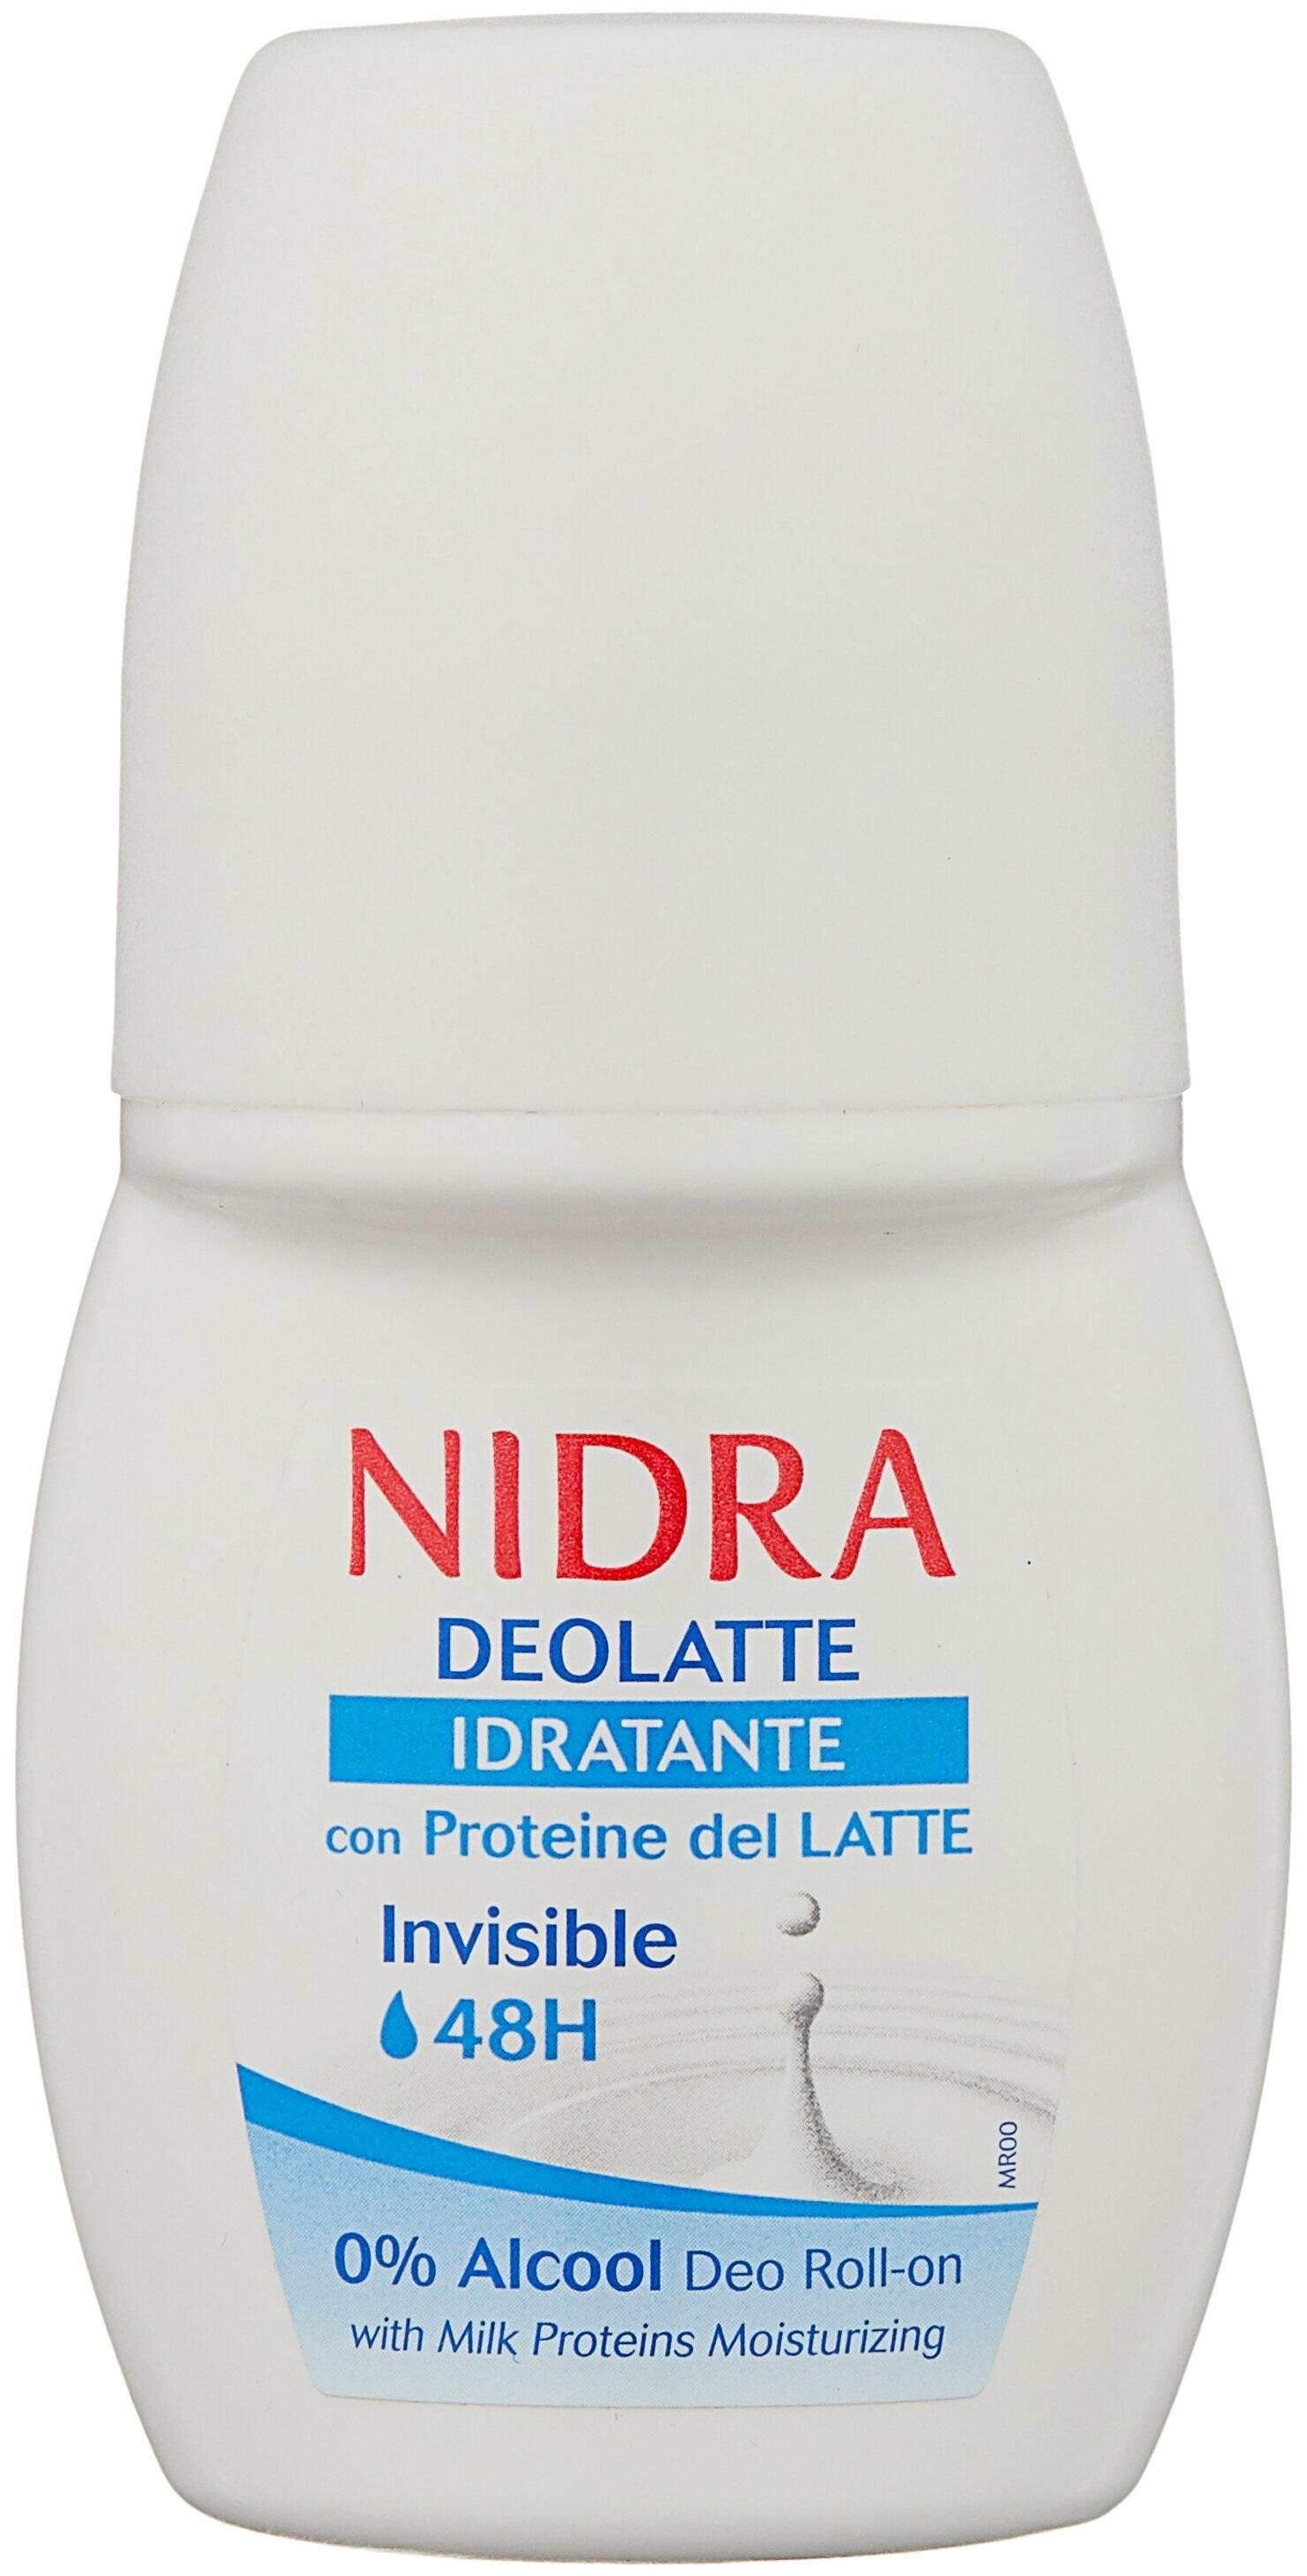 Nidra Deolatte Idratante с молочными протеинами